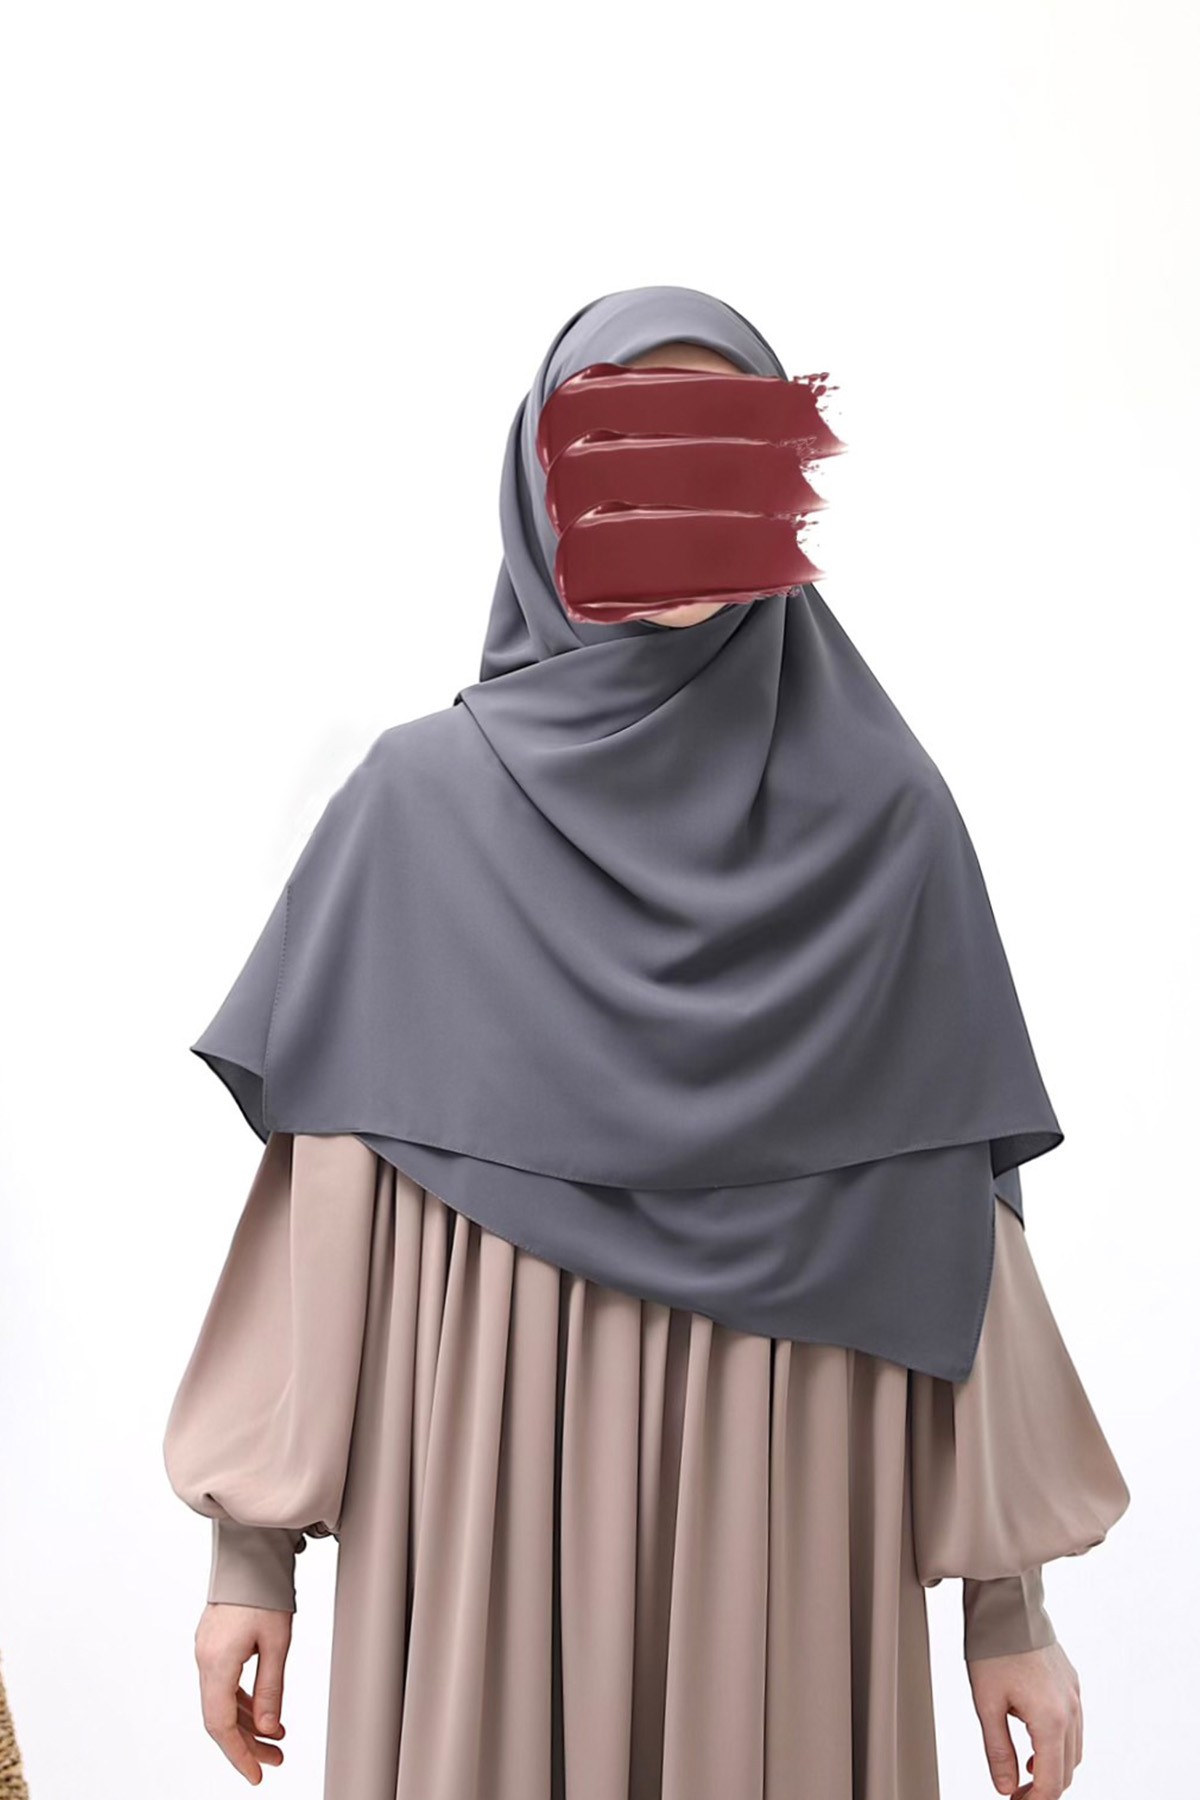 Square Hijab - Gray